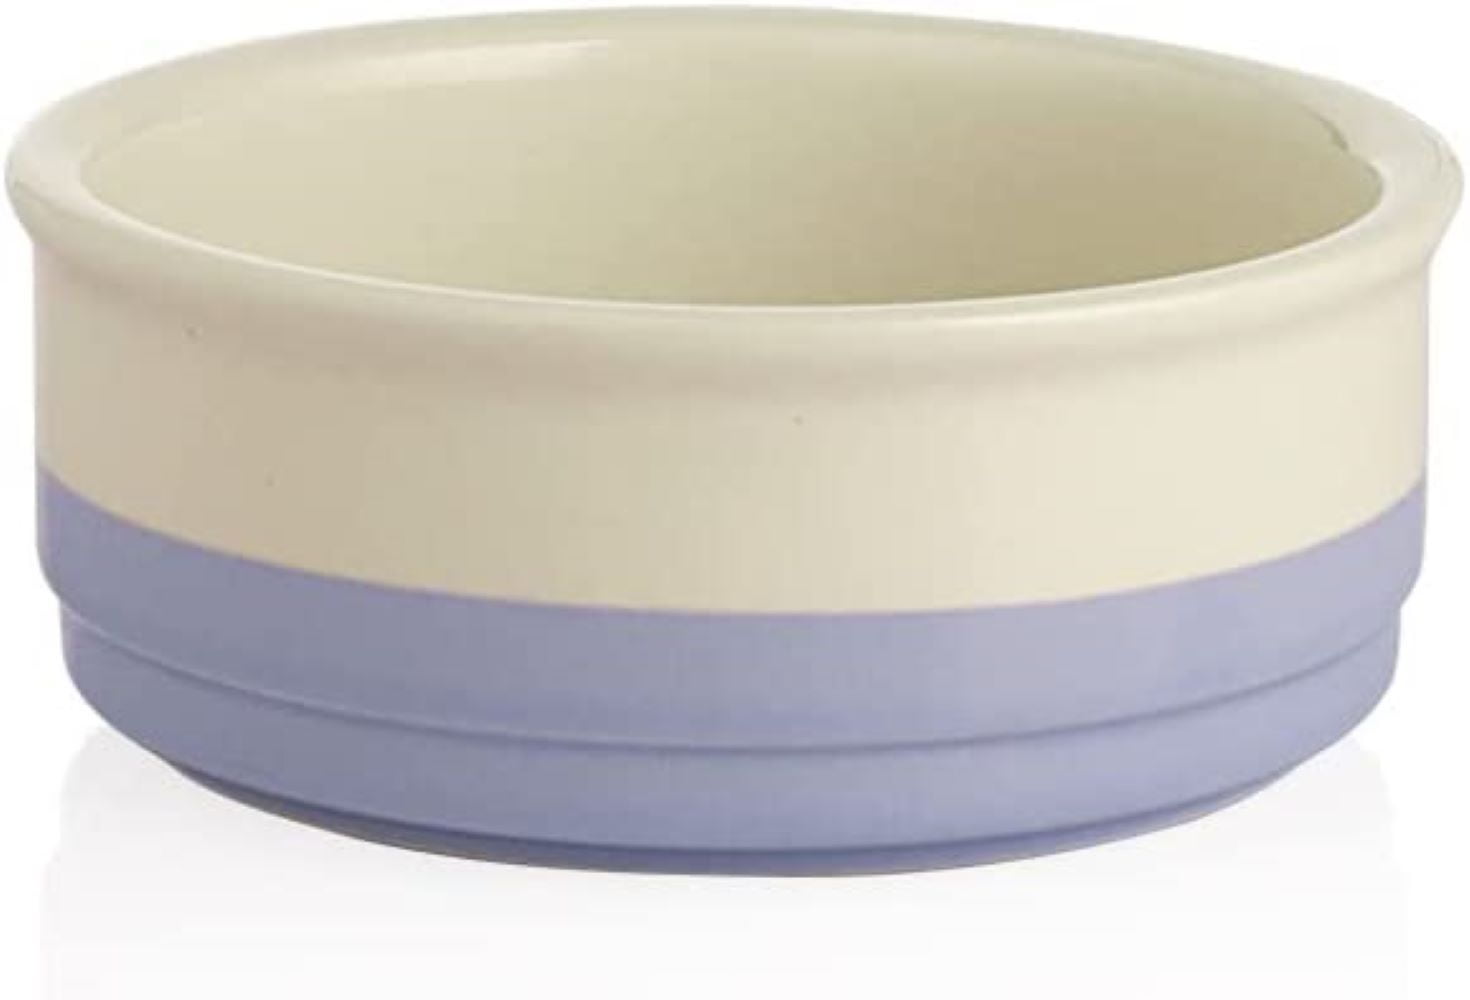 SWEEJAR Ceramic Dog Bowls with Bone Pattern, Dog Food Dish for Small Dogs,  Porcelain Pet Bowl,16 oz (Beige) 